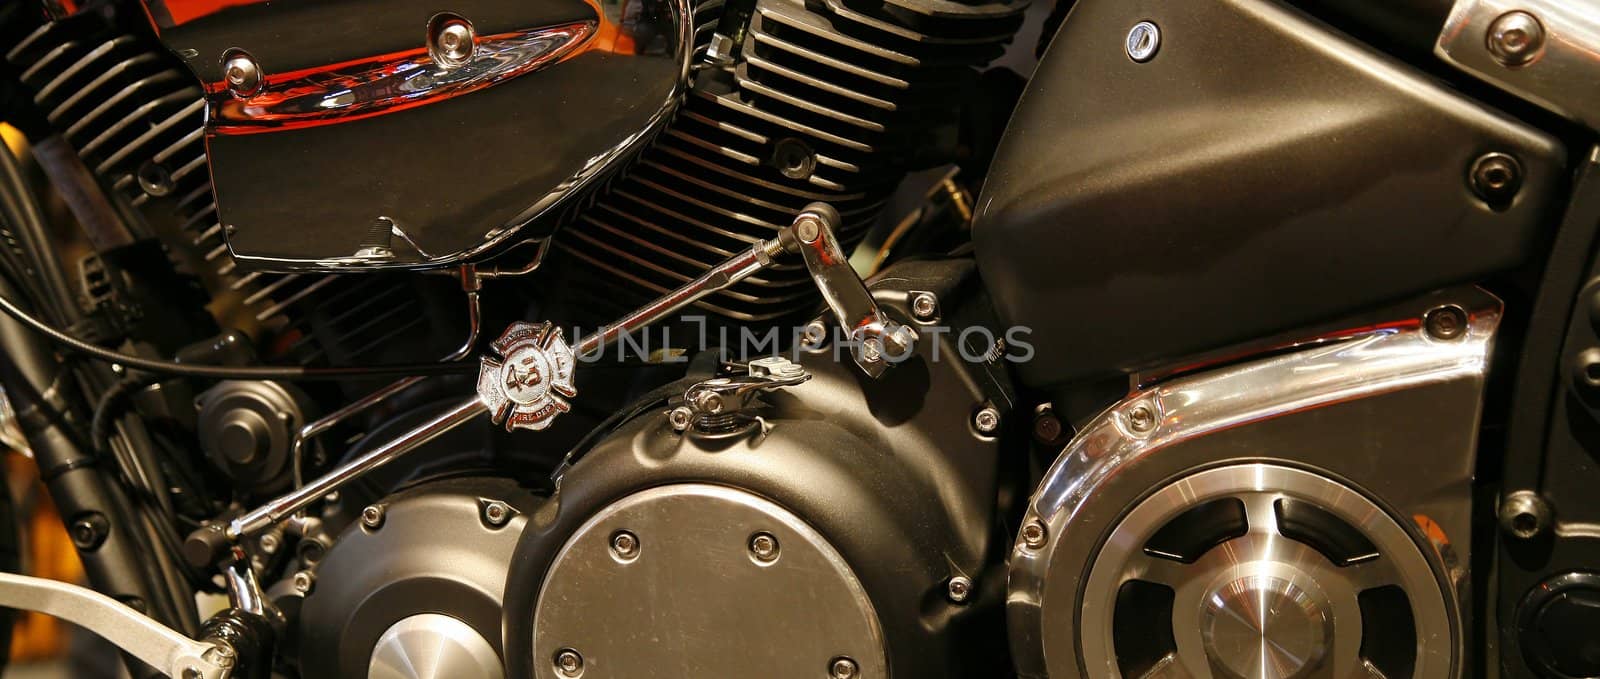 close-up of motorbike engine - international fair